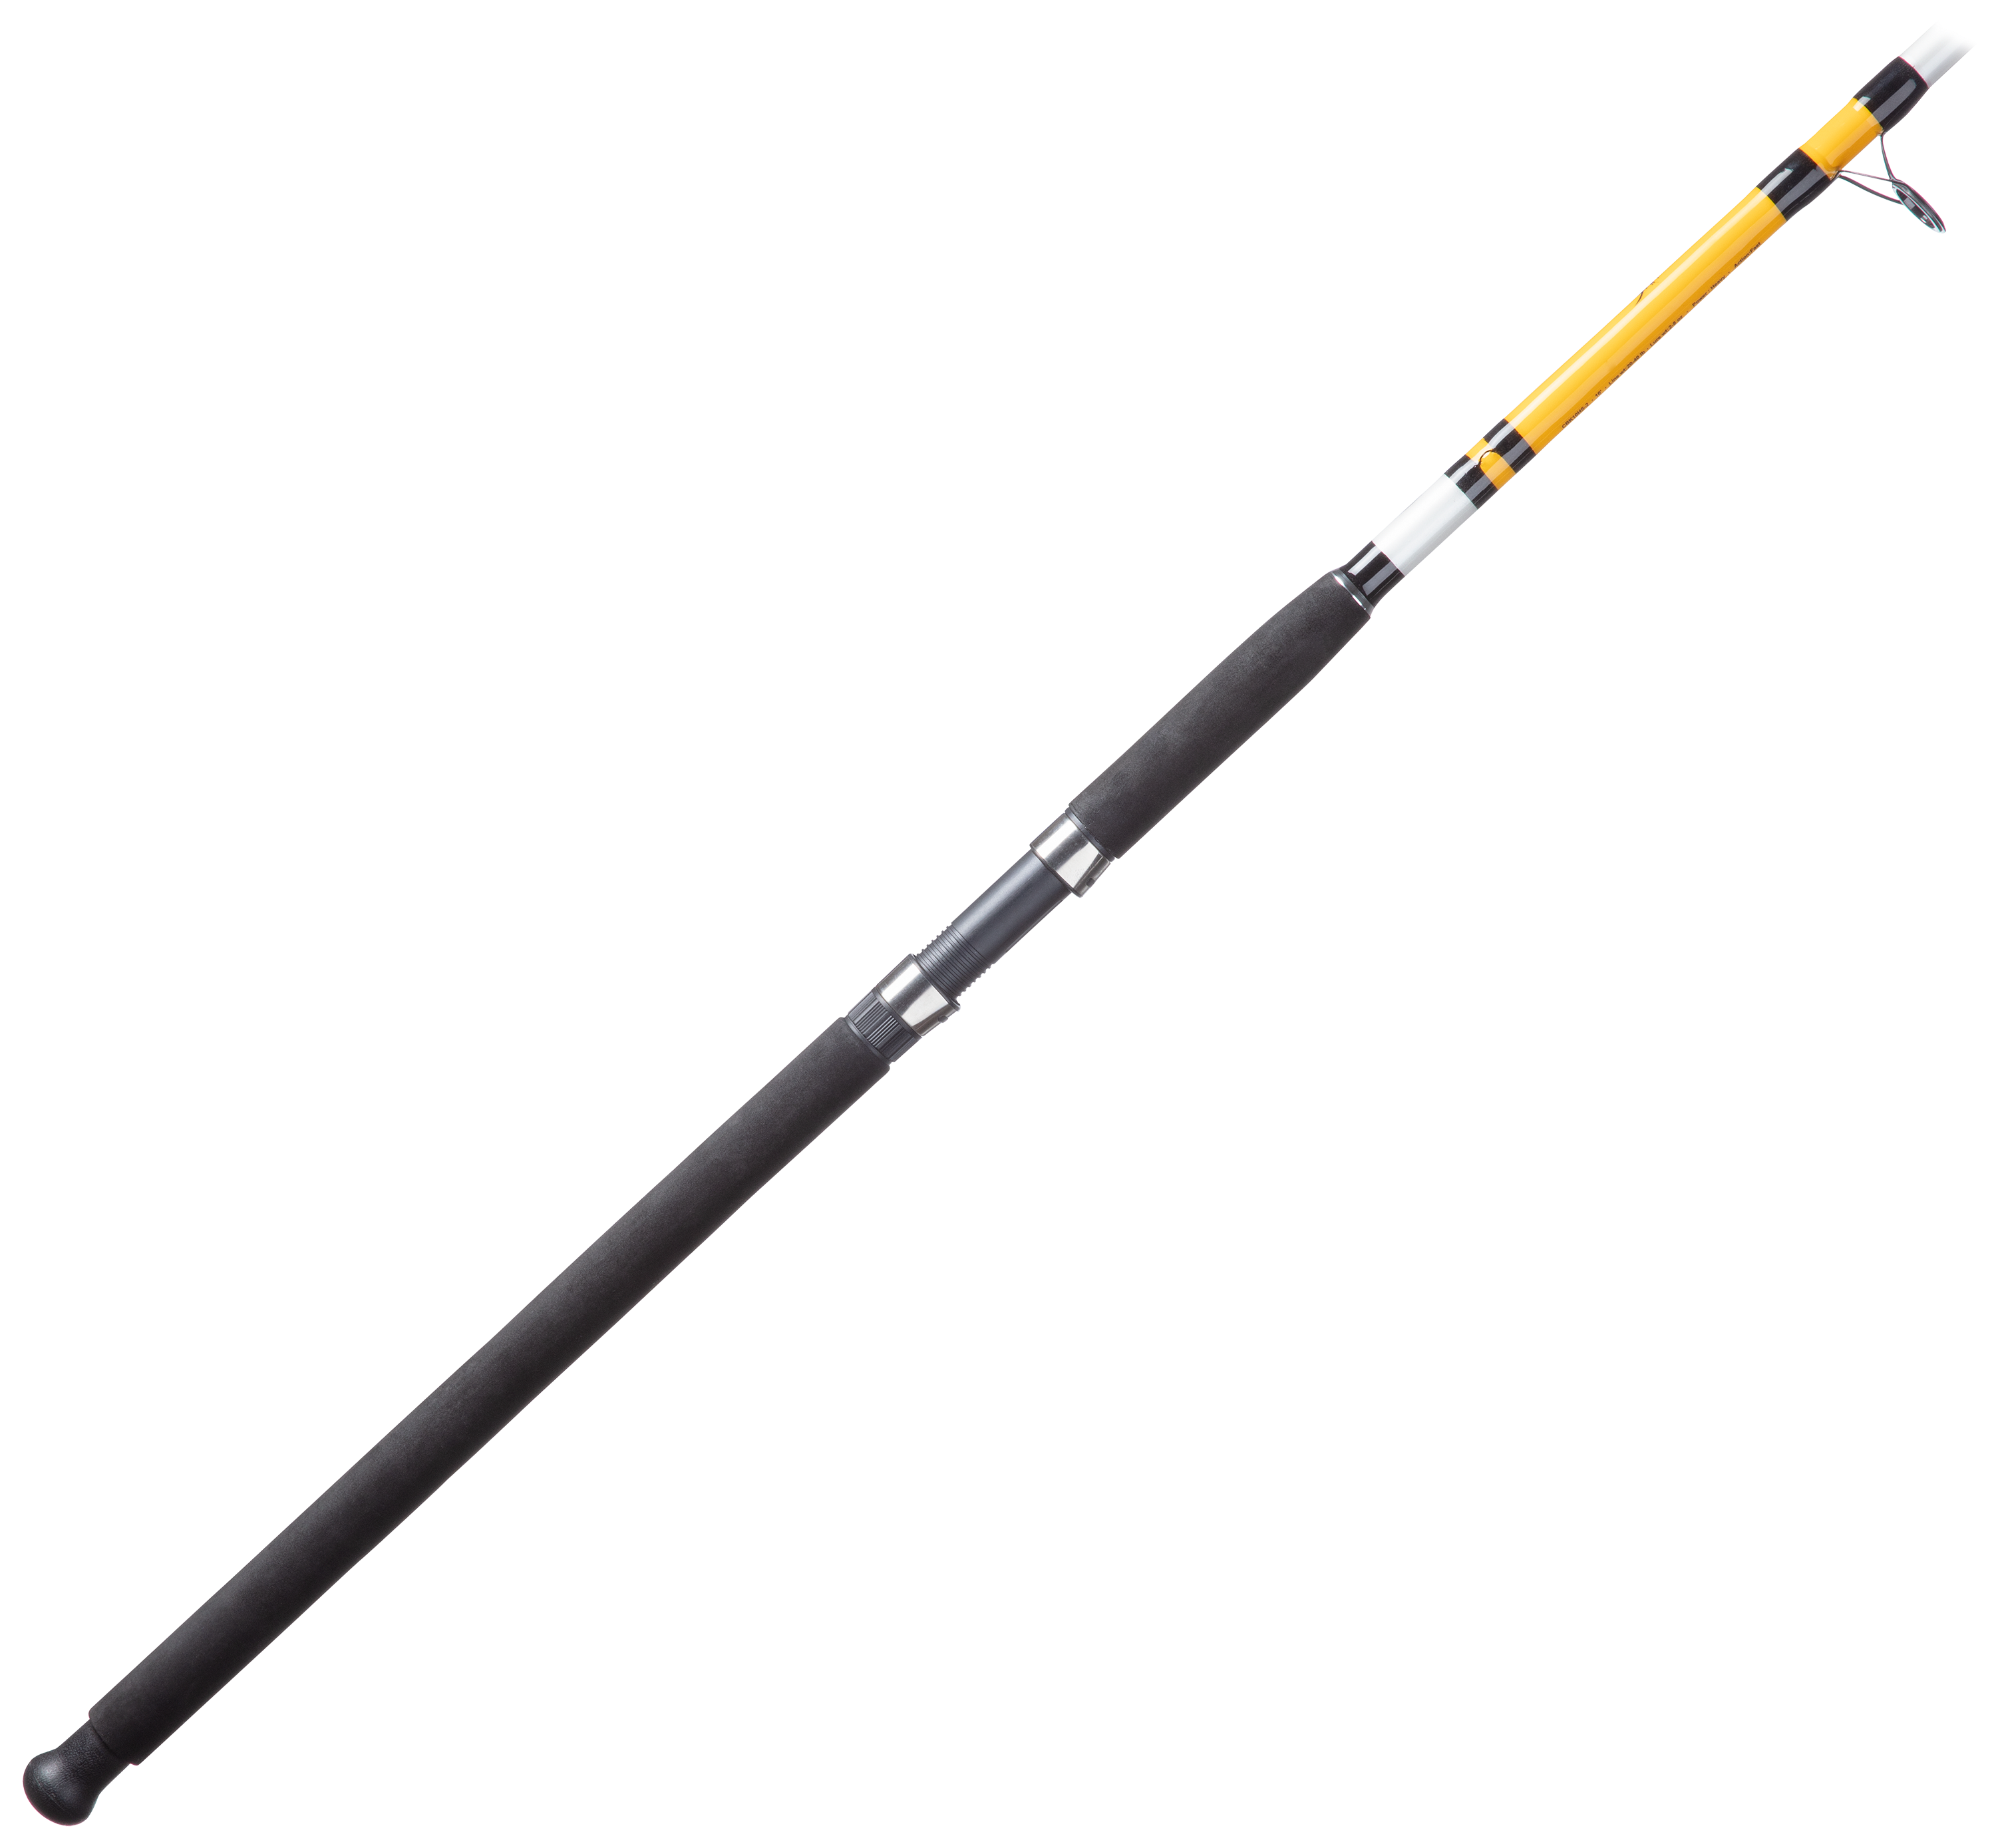 Whuppin Stick WS66MC-2 medium 6'6 spinning rod